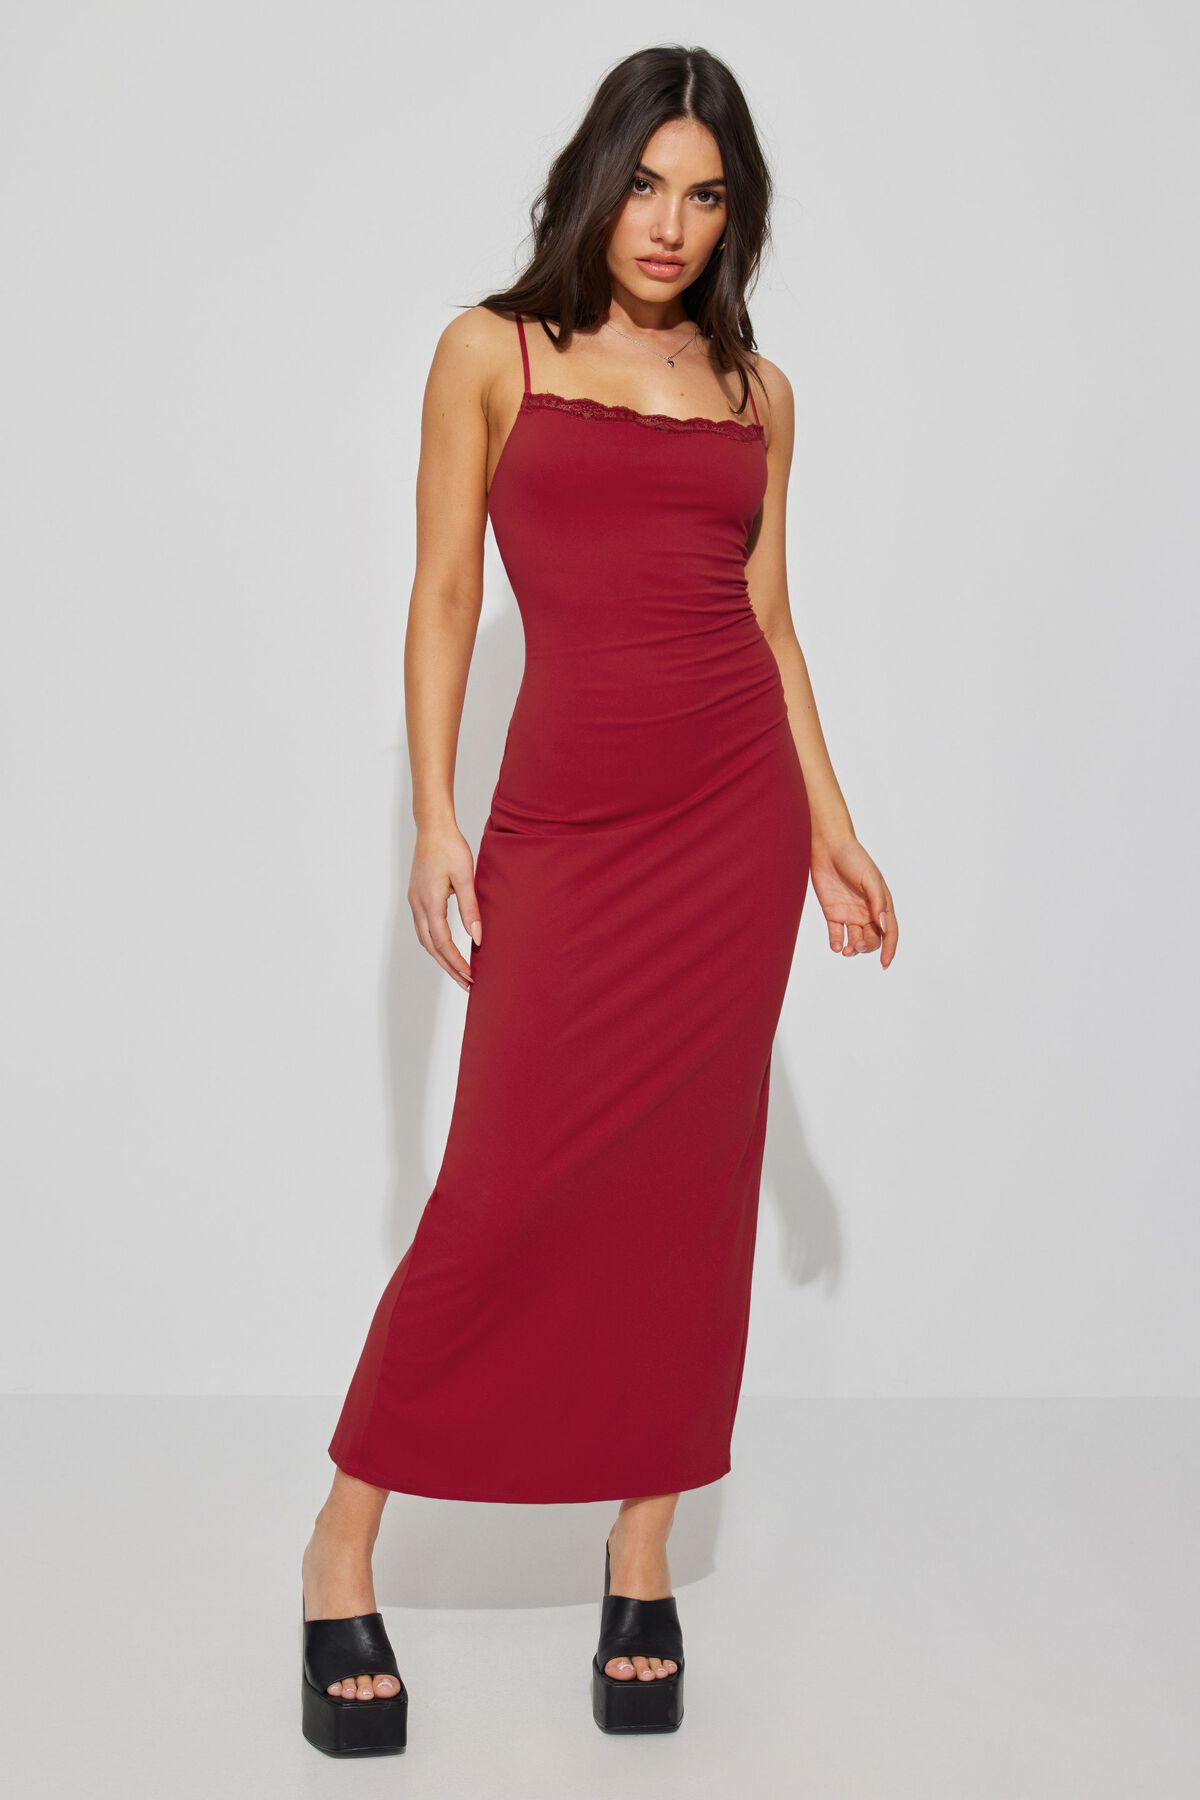 Tianna Lace Trim Maxi Dress Red | Garage